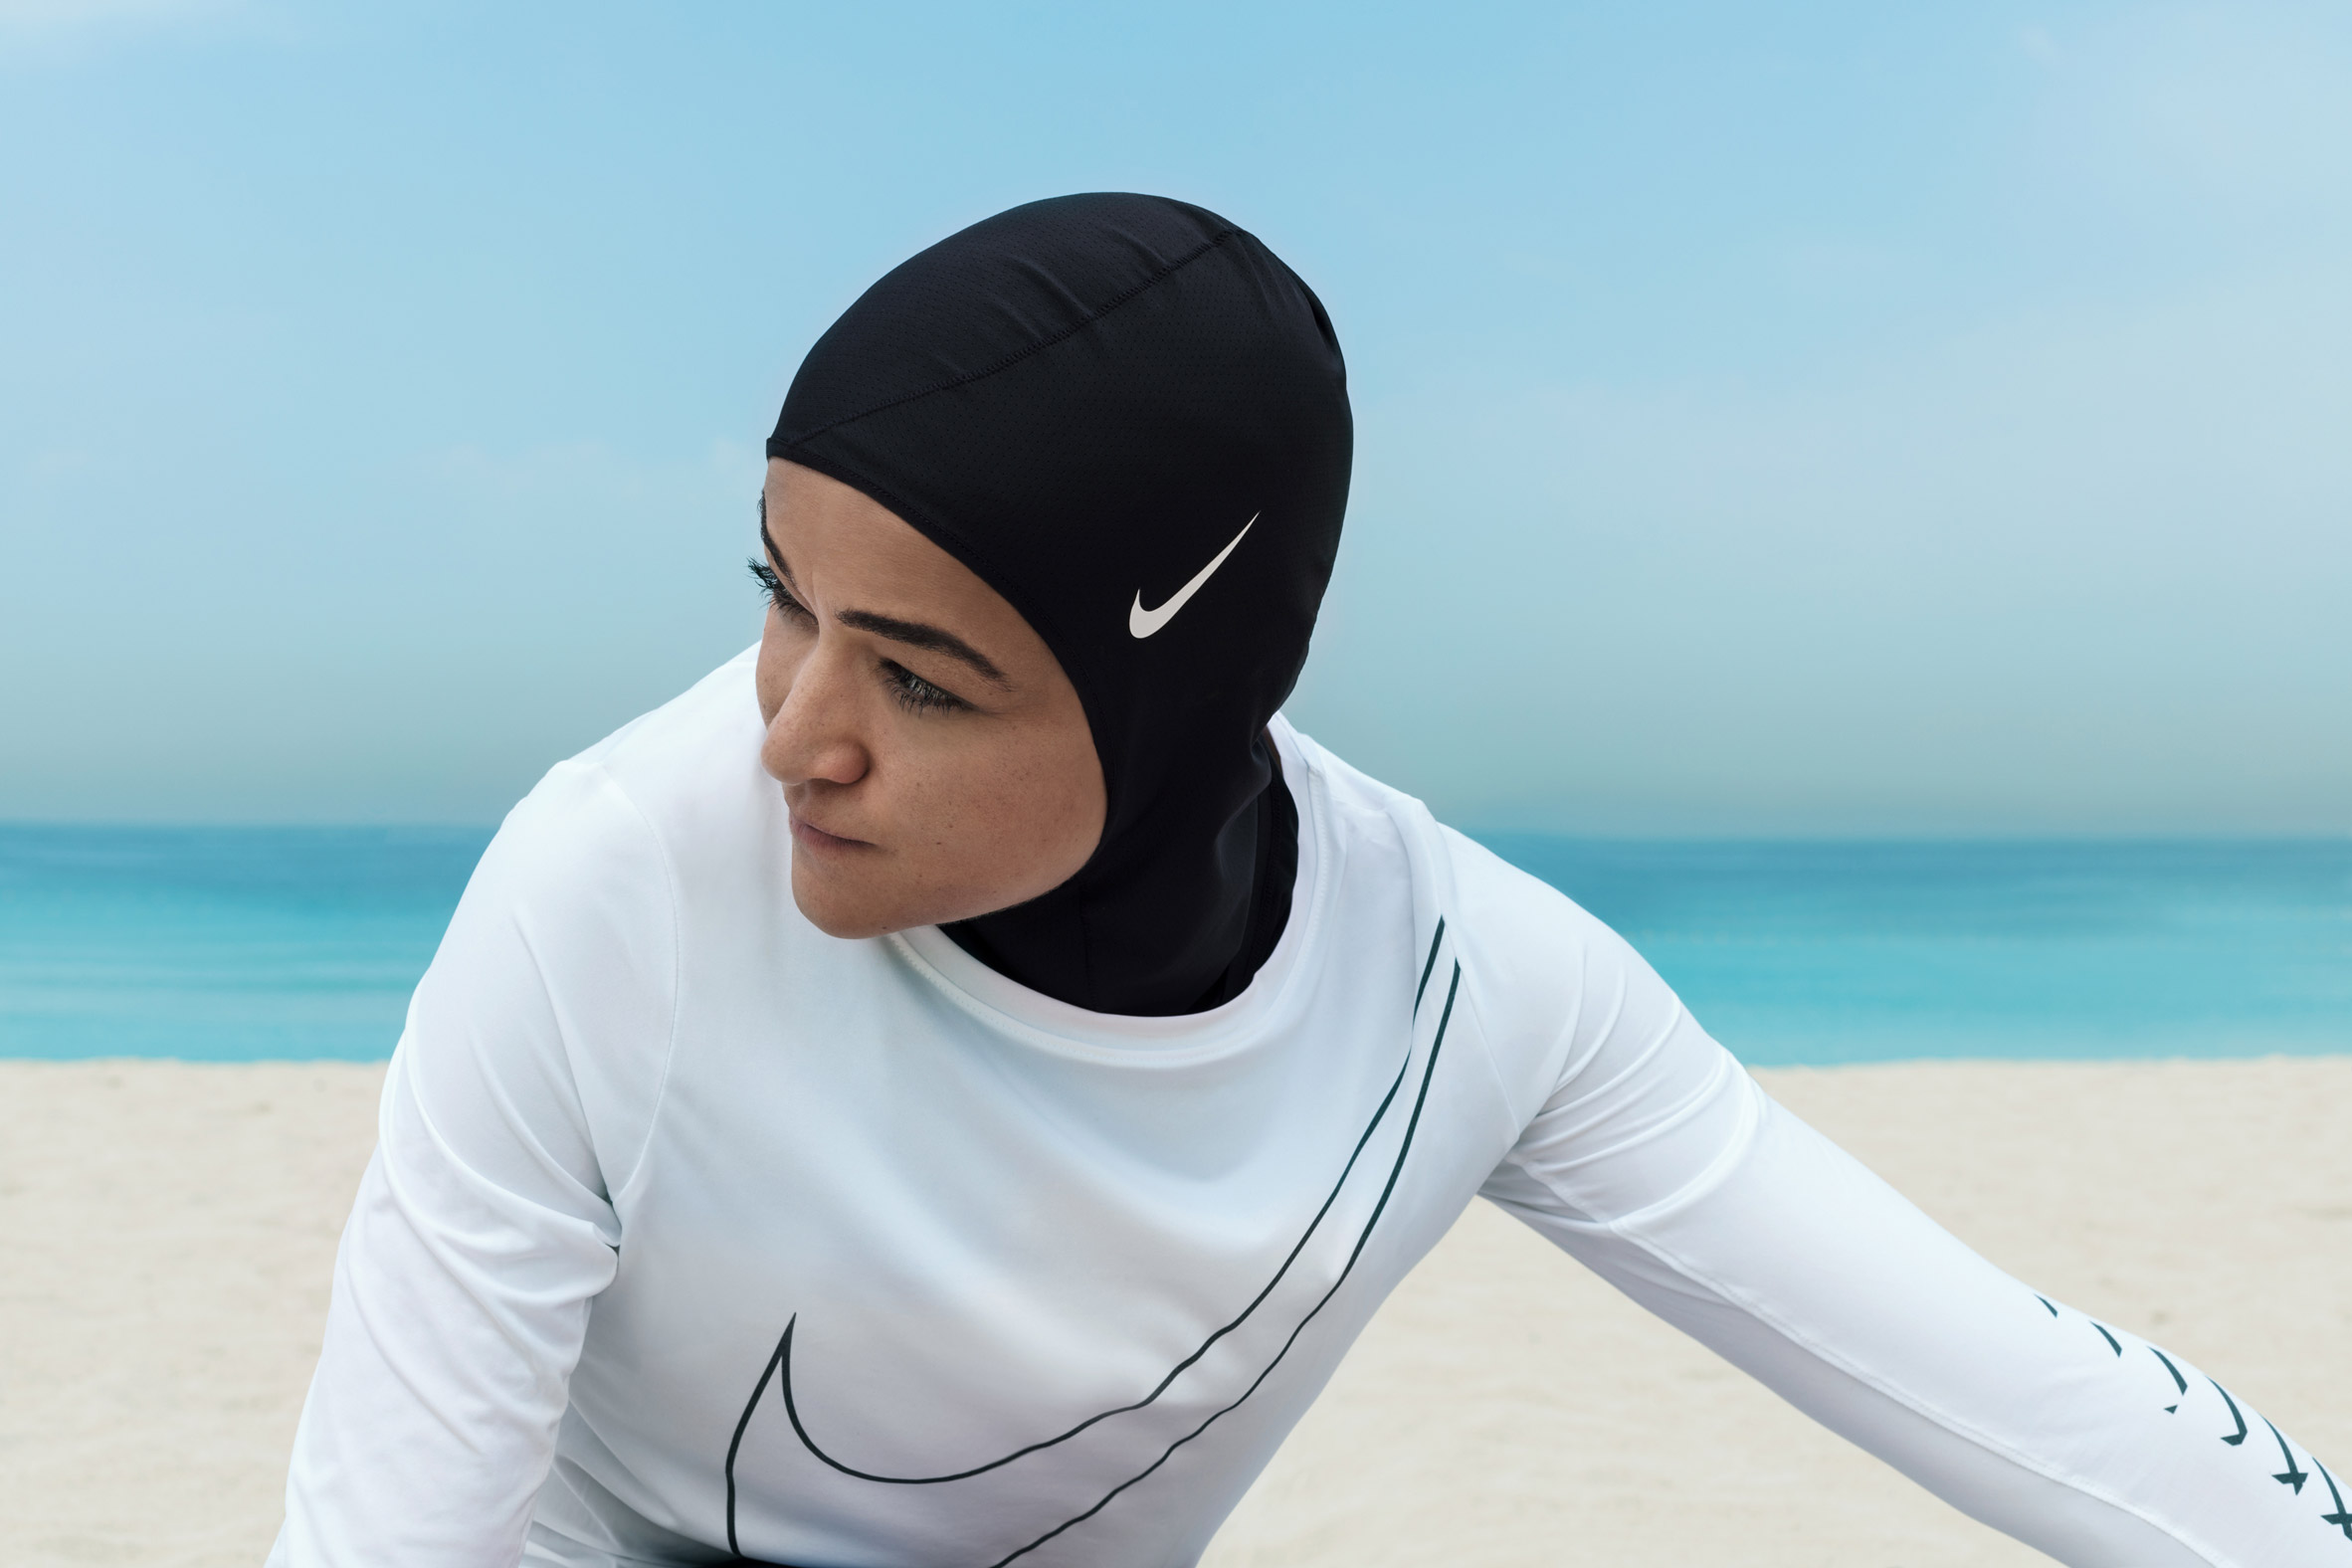 Nike Pro Hijab for Muslim